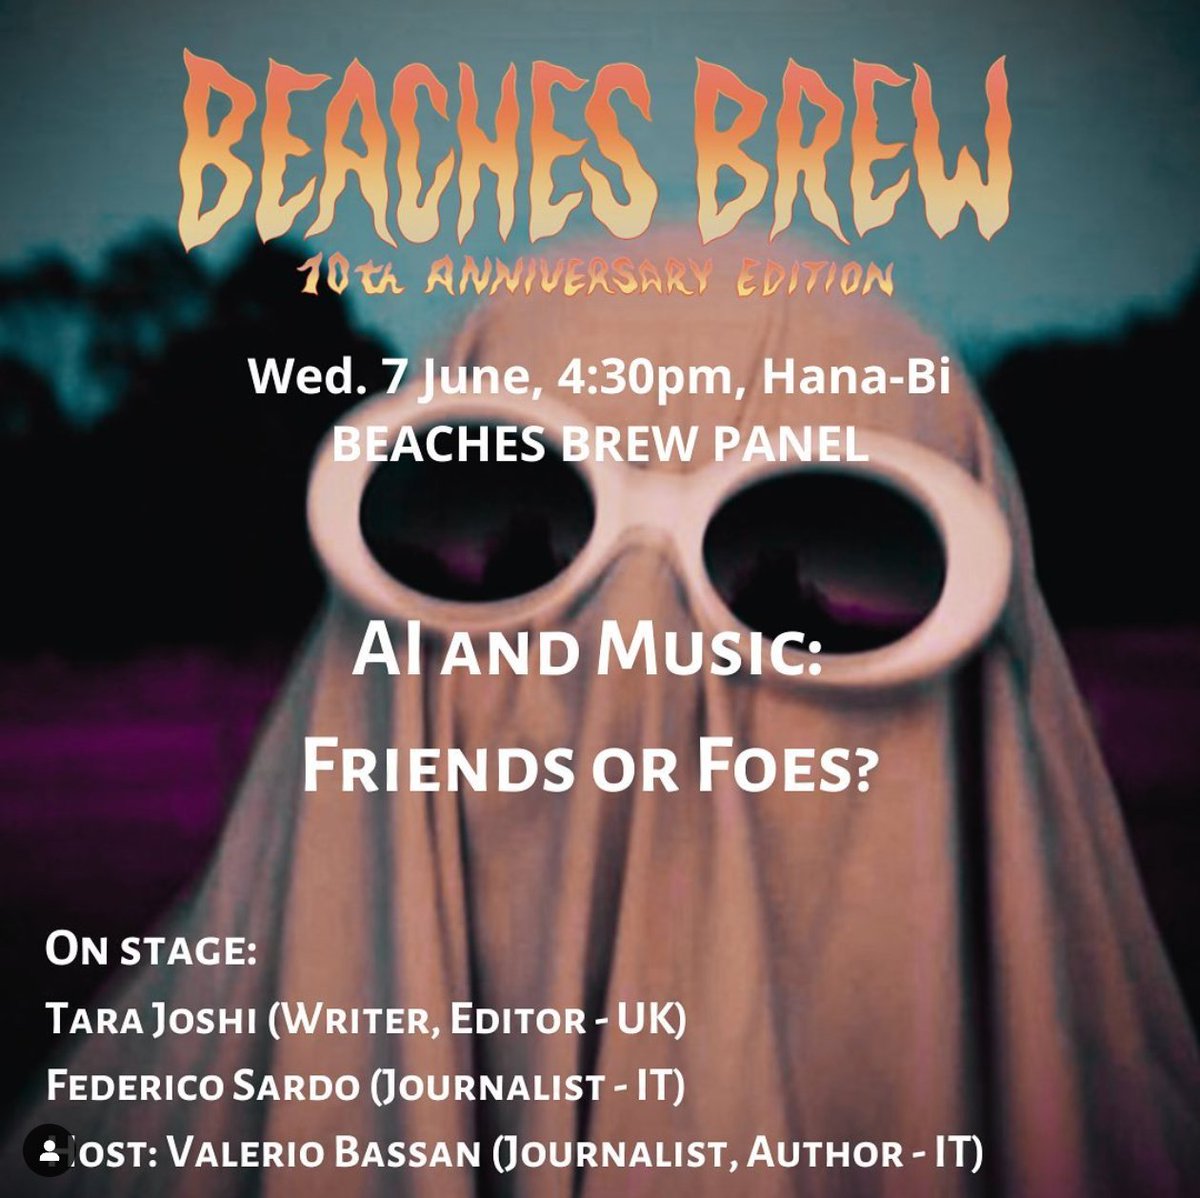 🚩 Beaches Brew Panel
AI and Music: Friends or Foes? 🔮

📍 Wednesday, June 7th | Hana-Bi

On stage: London-based writer & editor Tara Joshi (@tara_dwmd) Italian journalist Federico Sardo (@justthatsome) Host: Journalist & author Valerio Bassan (@valeriobassan) 

(1/2)